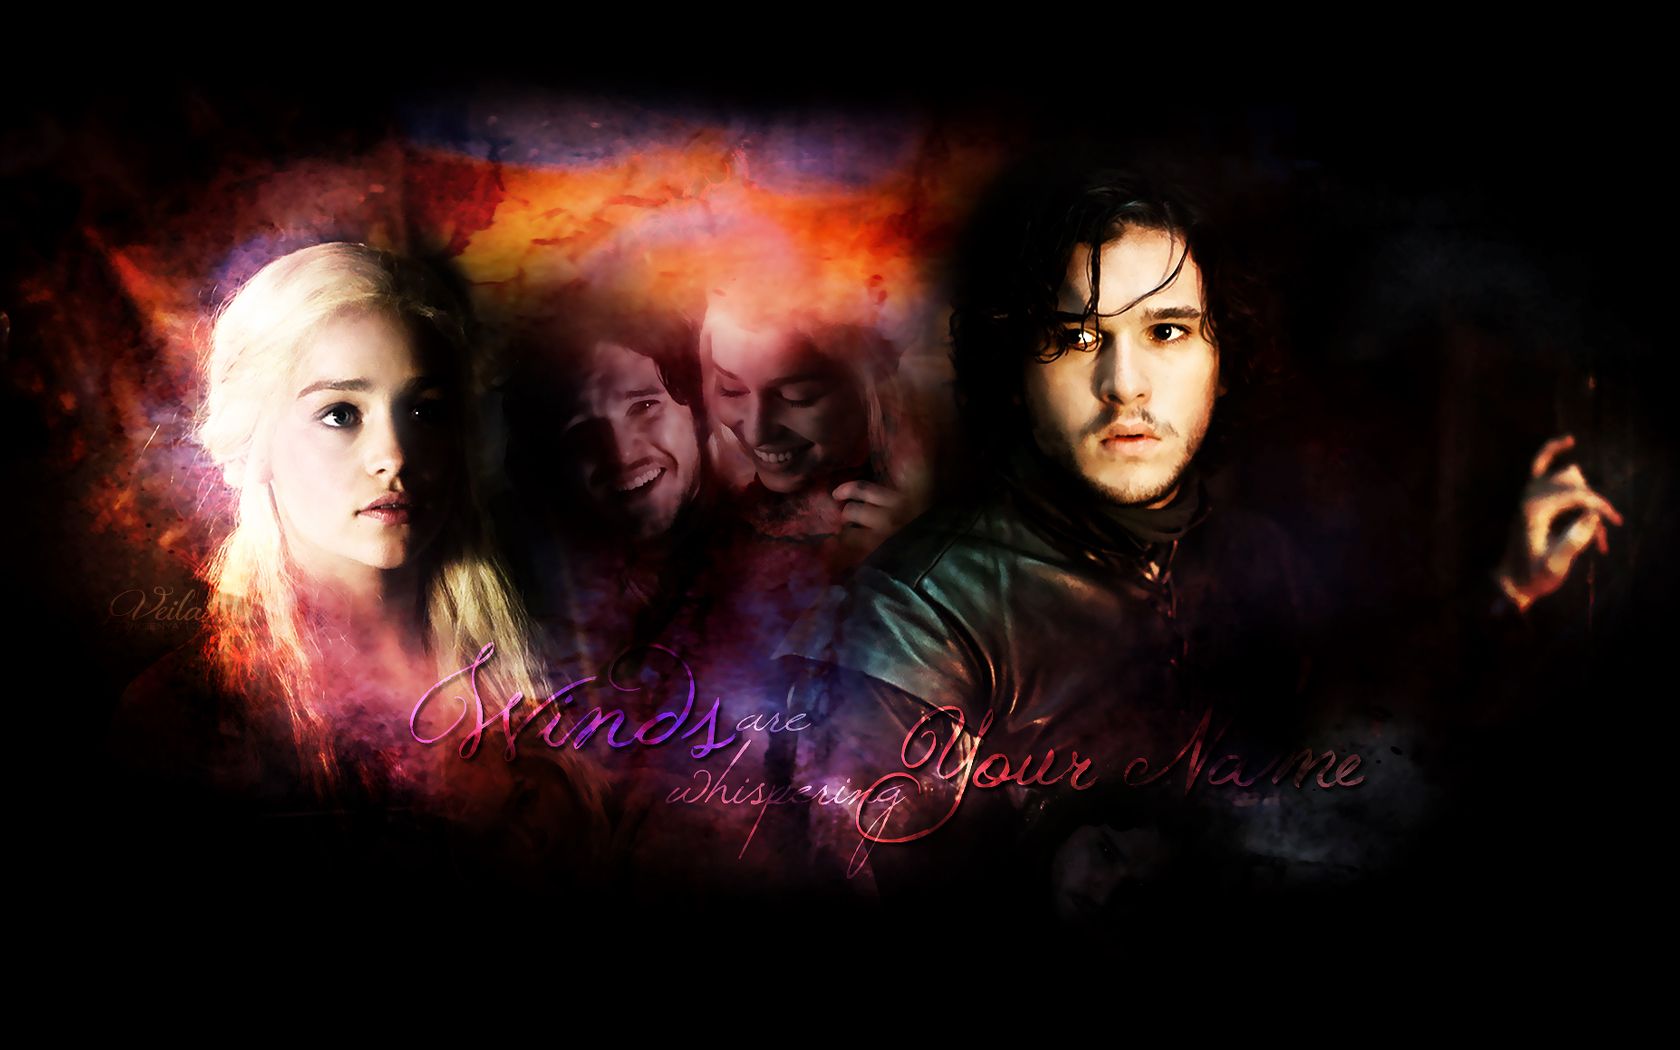 Jon Snow Daenerys Targaryen Last Scene Wallpapers